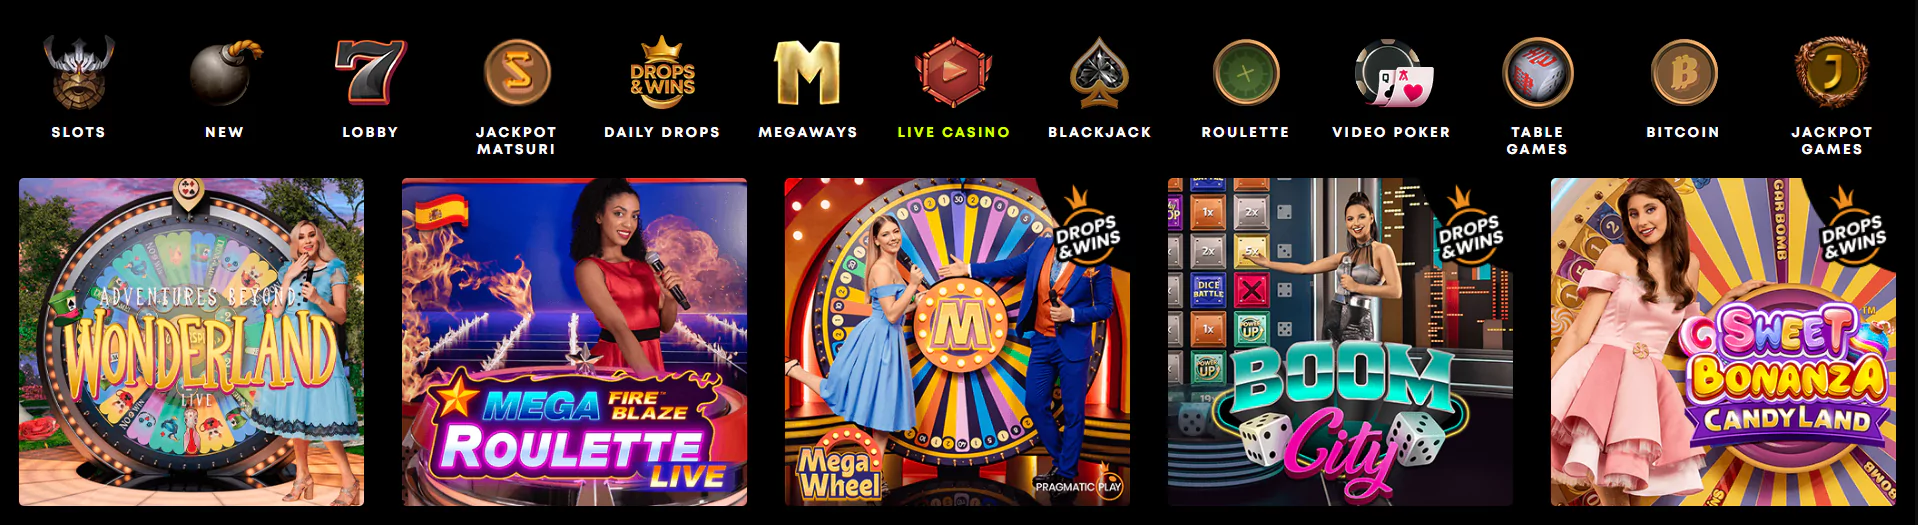 Live Casino Games at Spin Samurai - Screenshot From Official Website